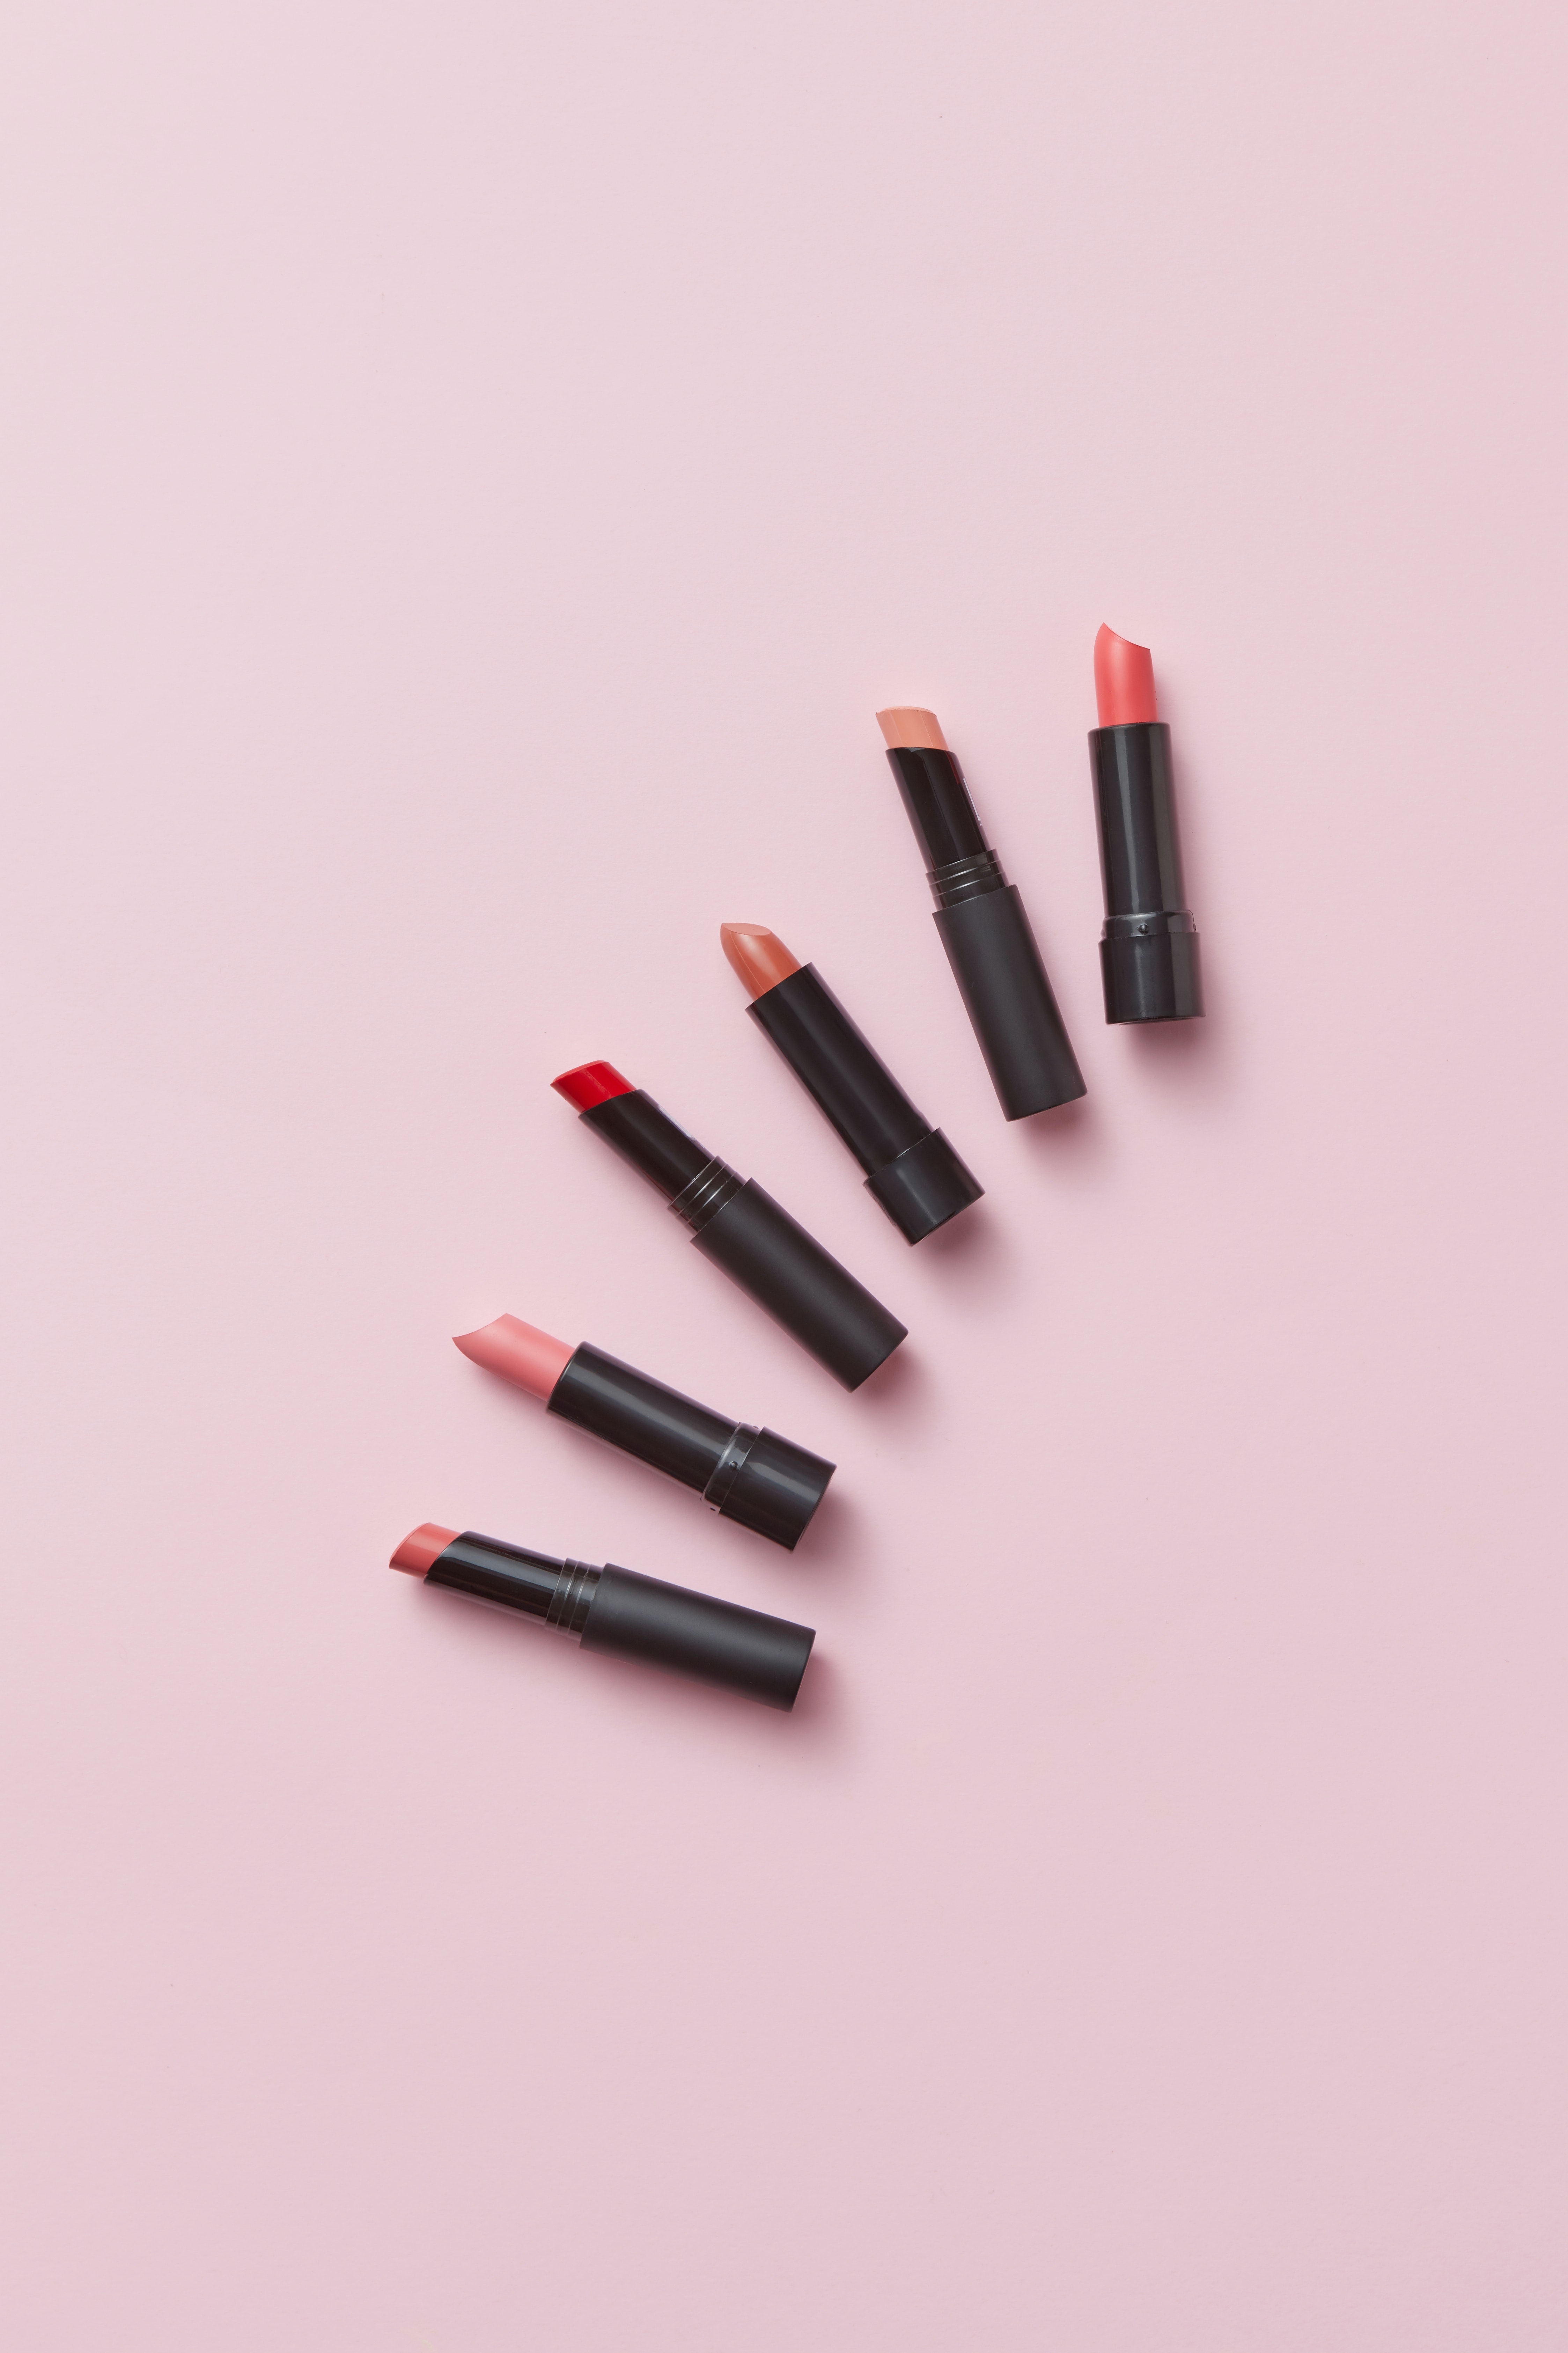 A set of different lipsticks. │ Source: Unsplash